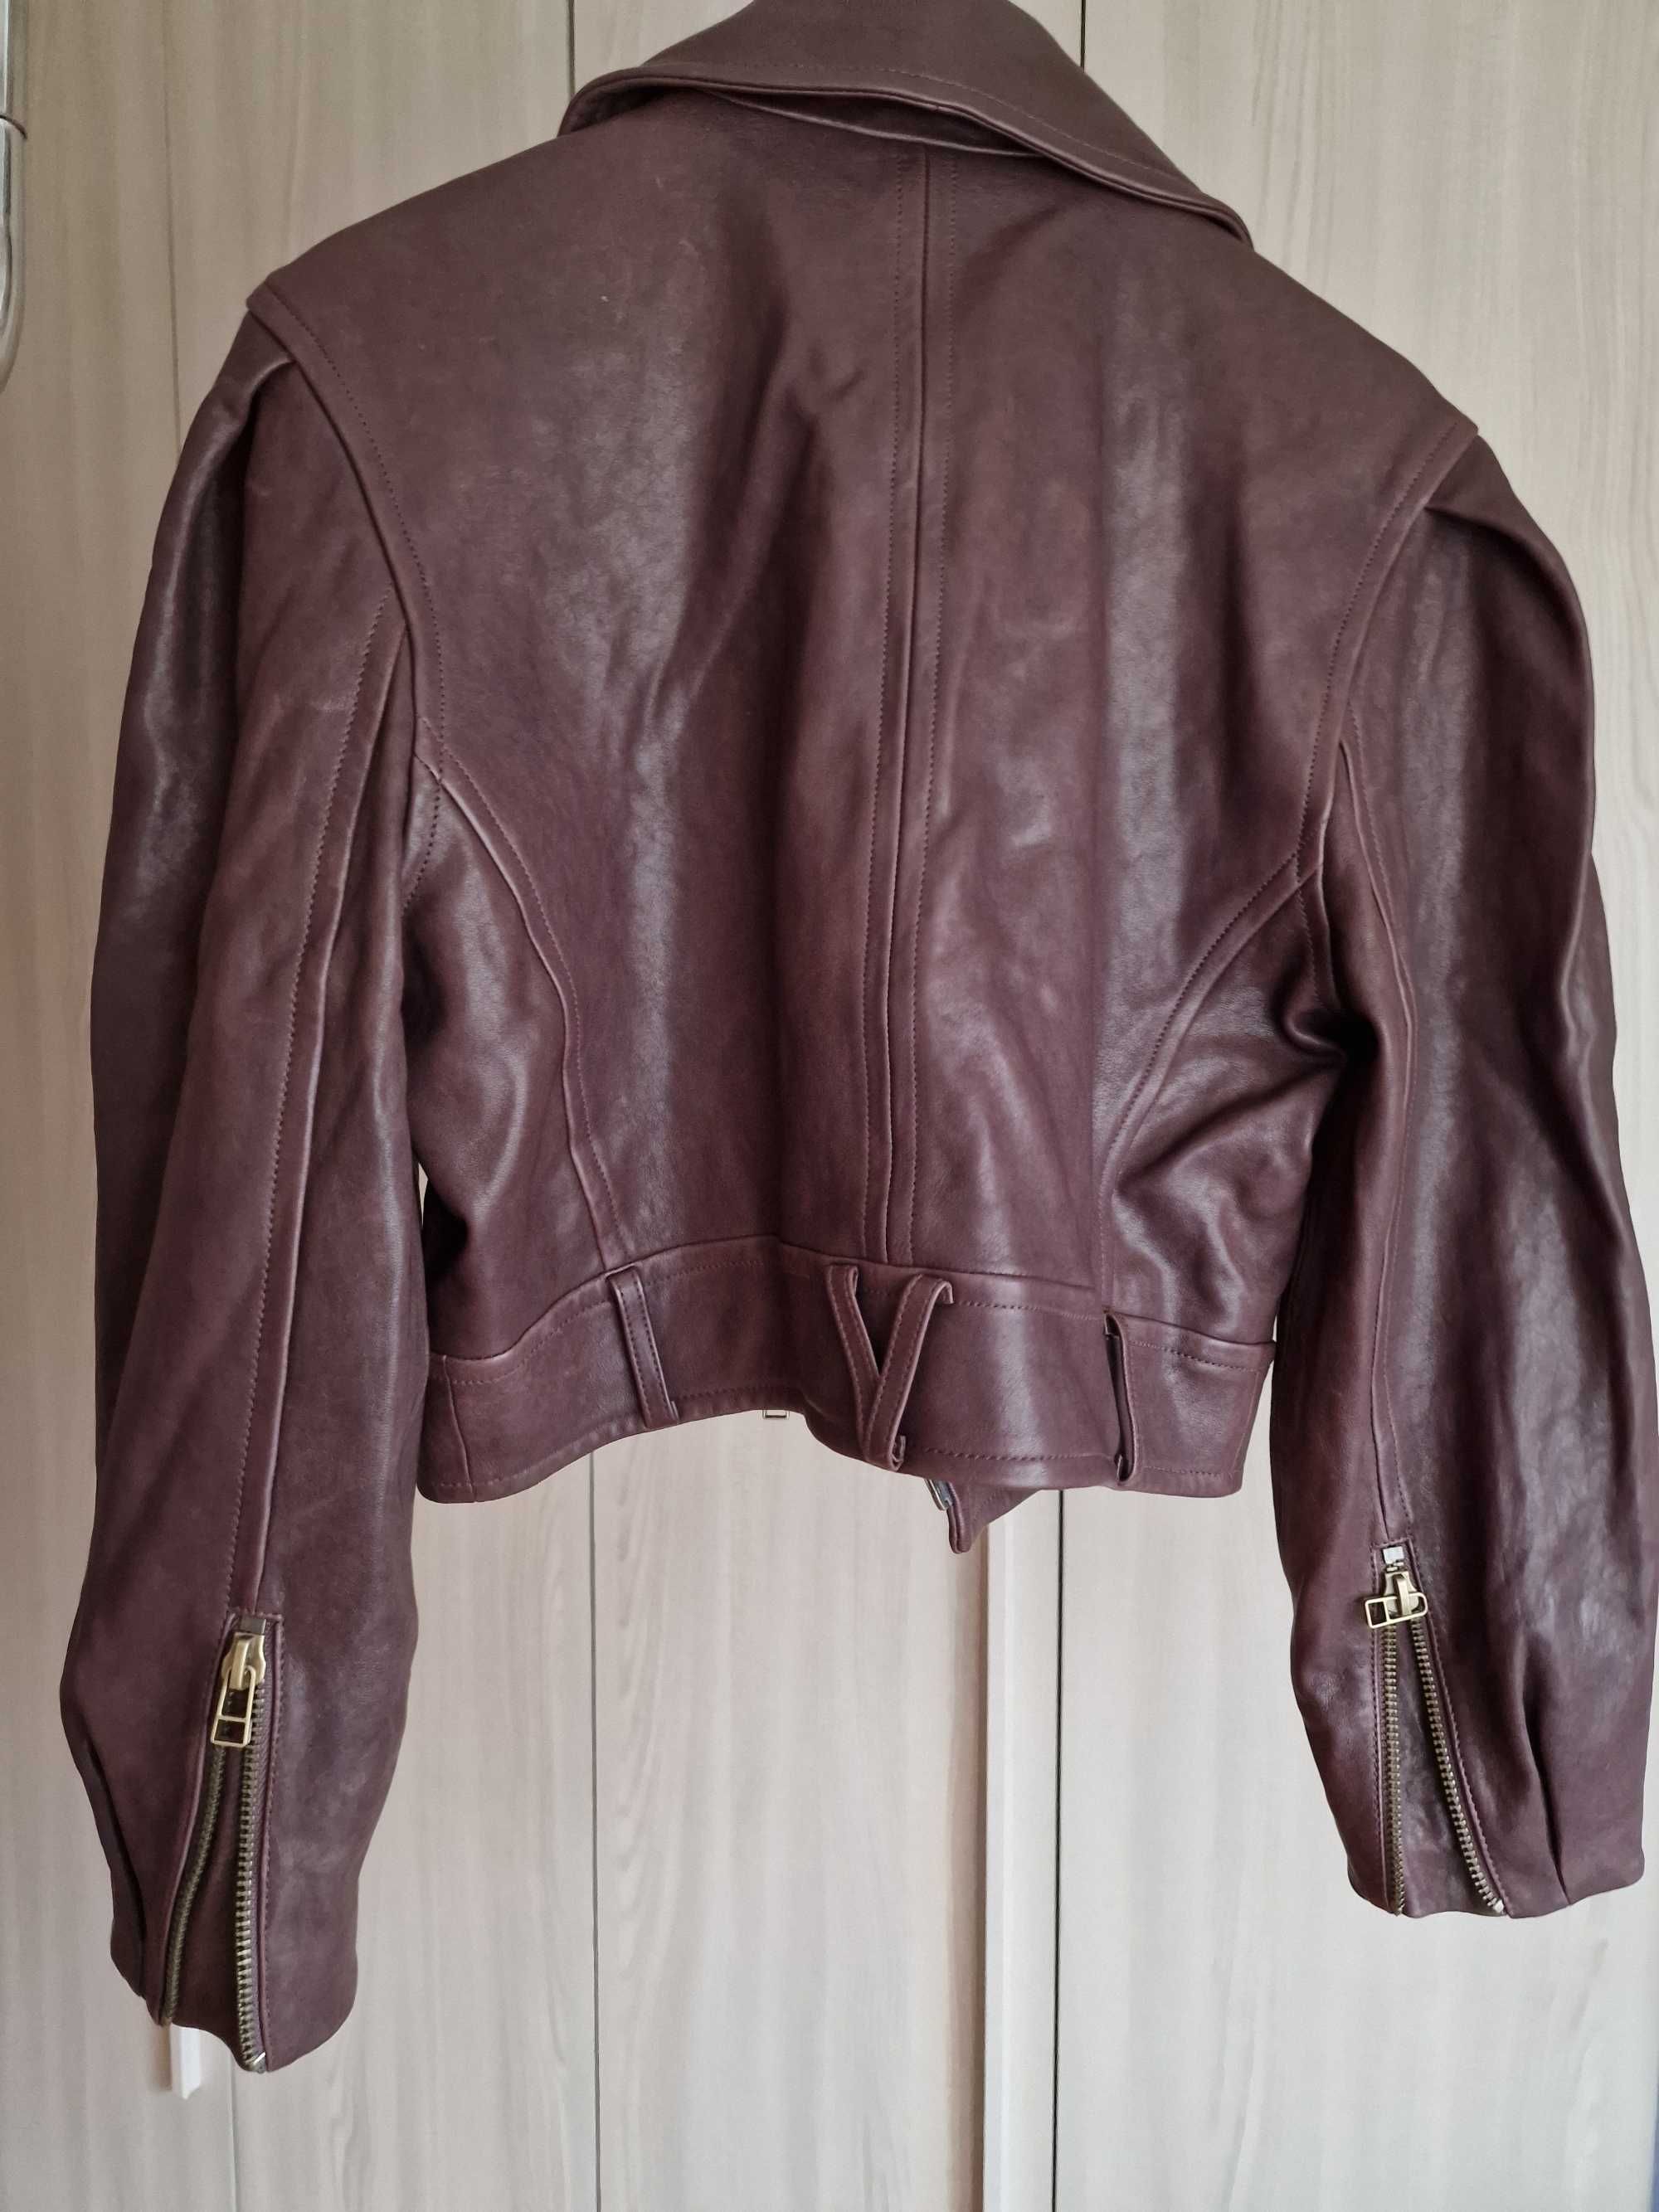 Veronica Beard Marea Moto Leather Jacket sz US 12. Never Worn